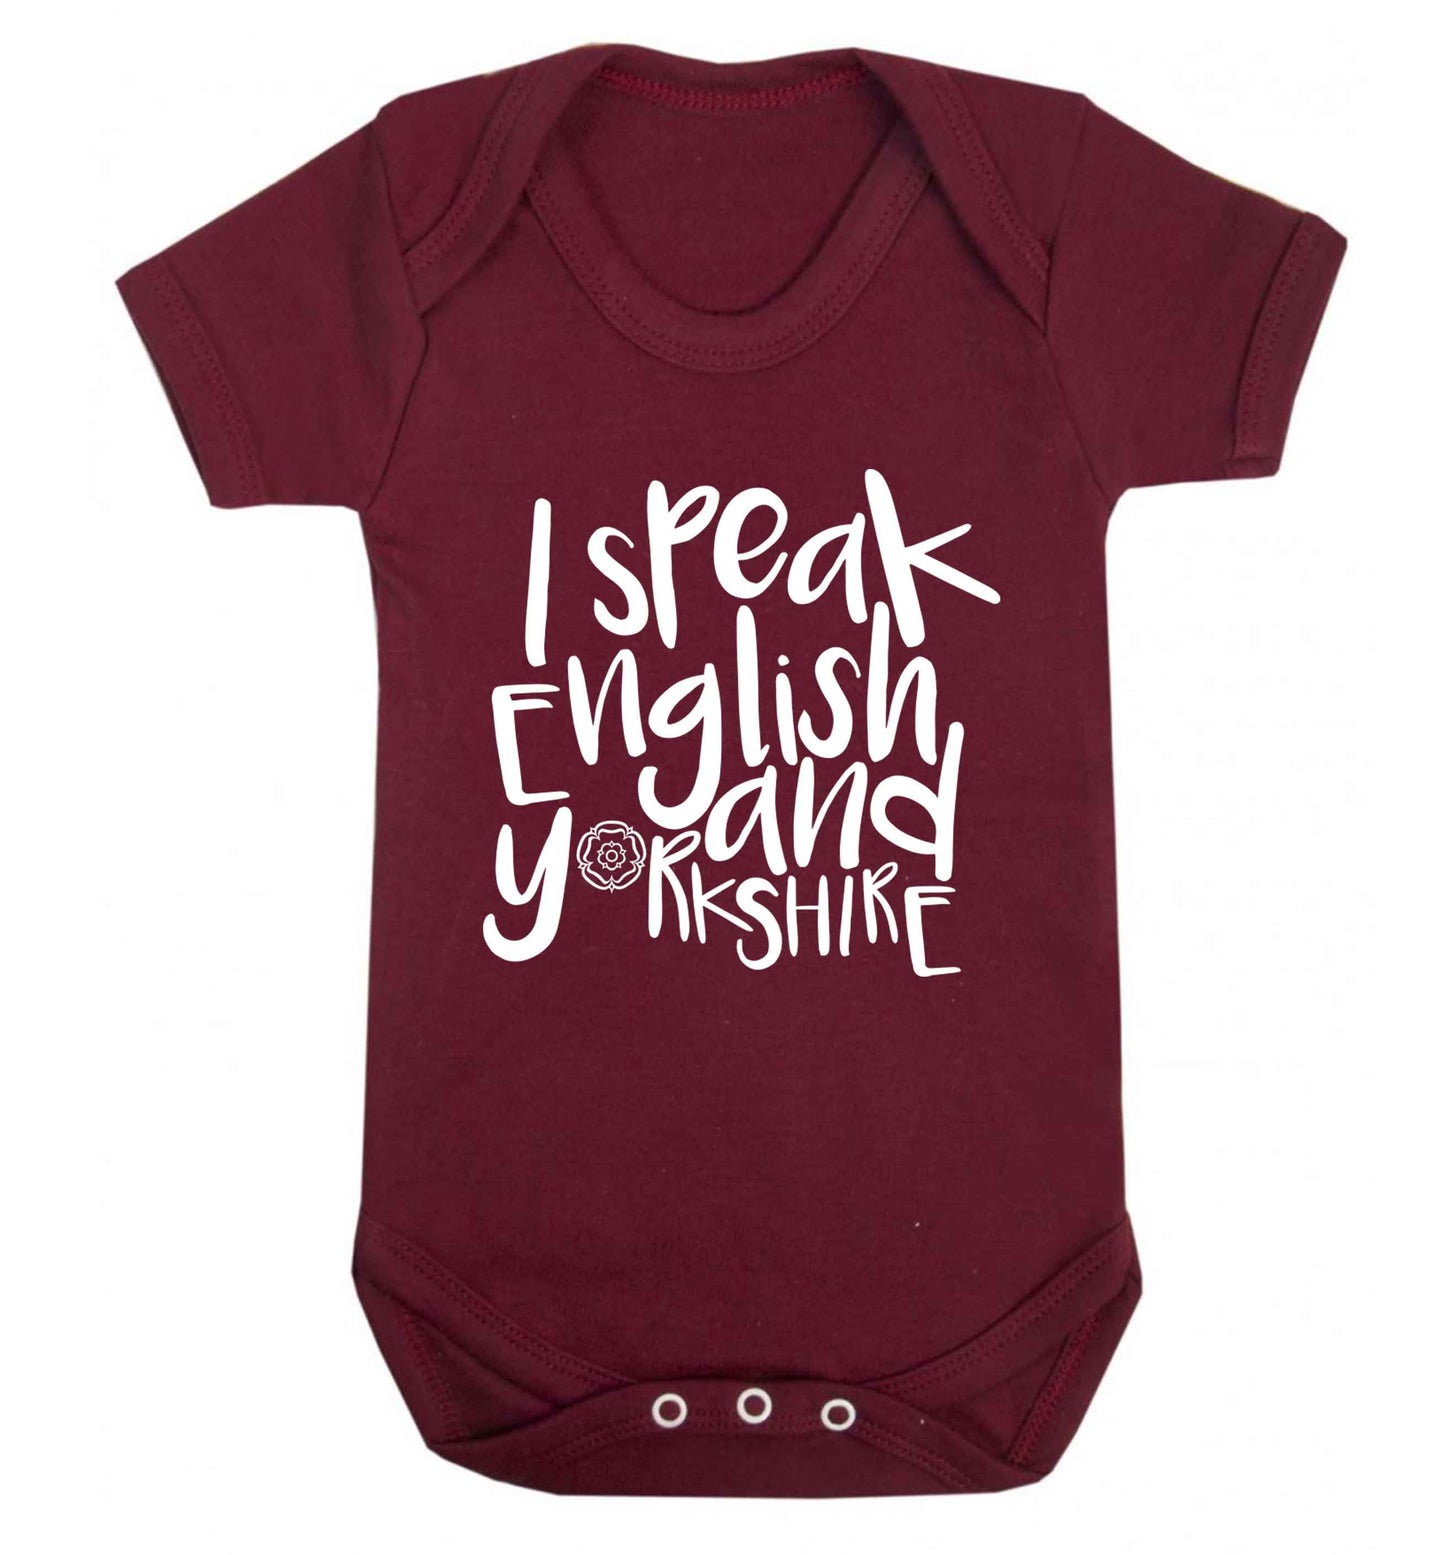 I speak English and Yorkshire Baby Vest maroon 18-24 months